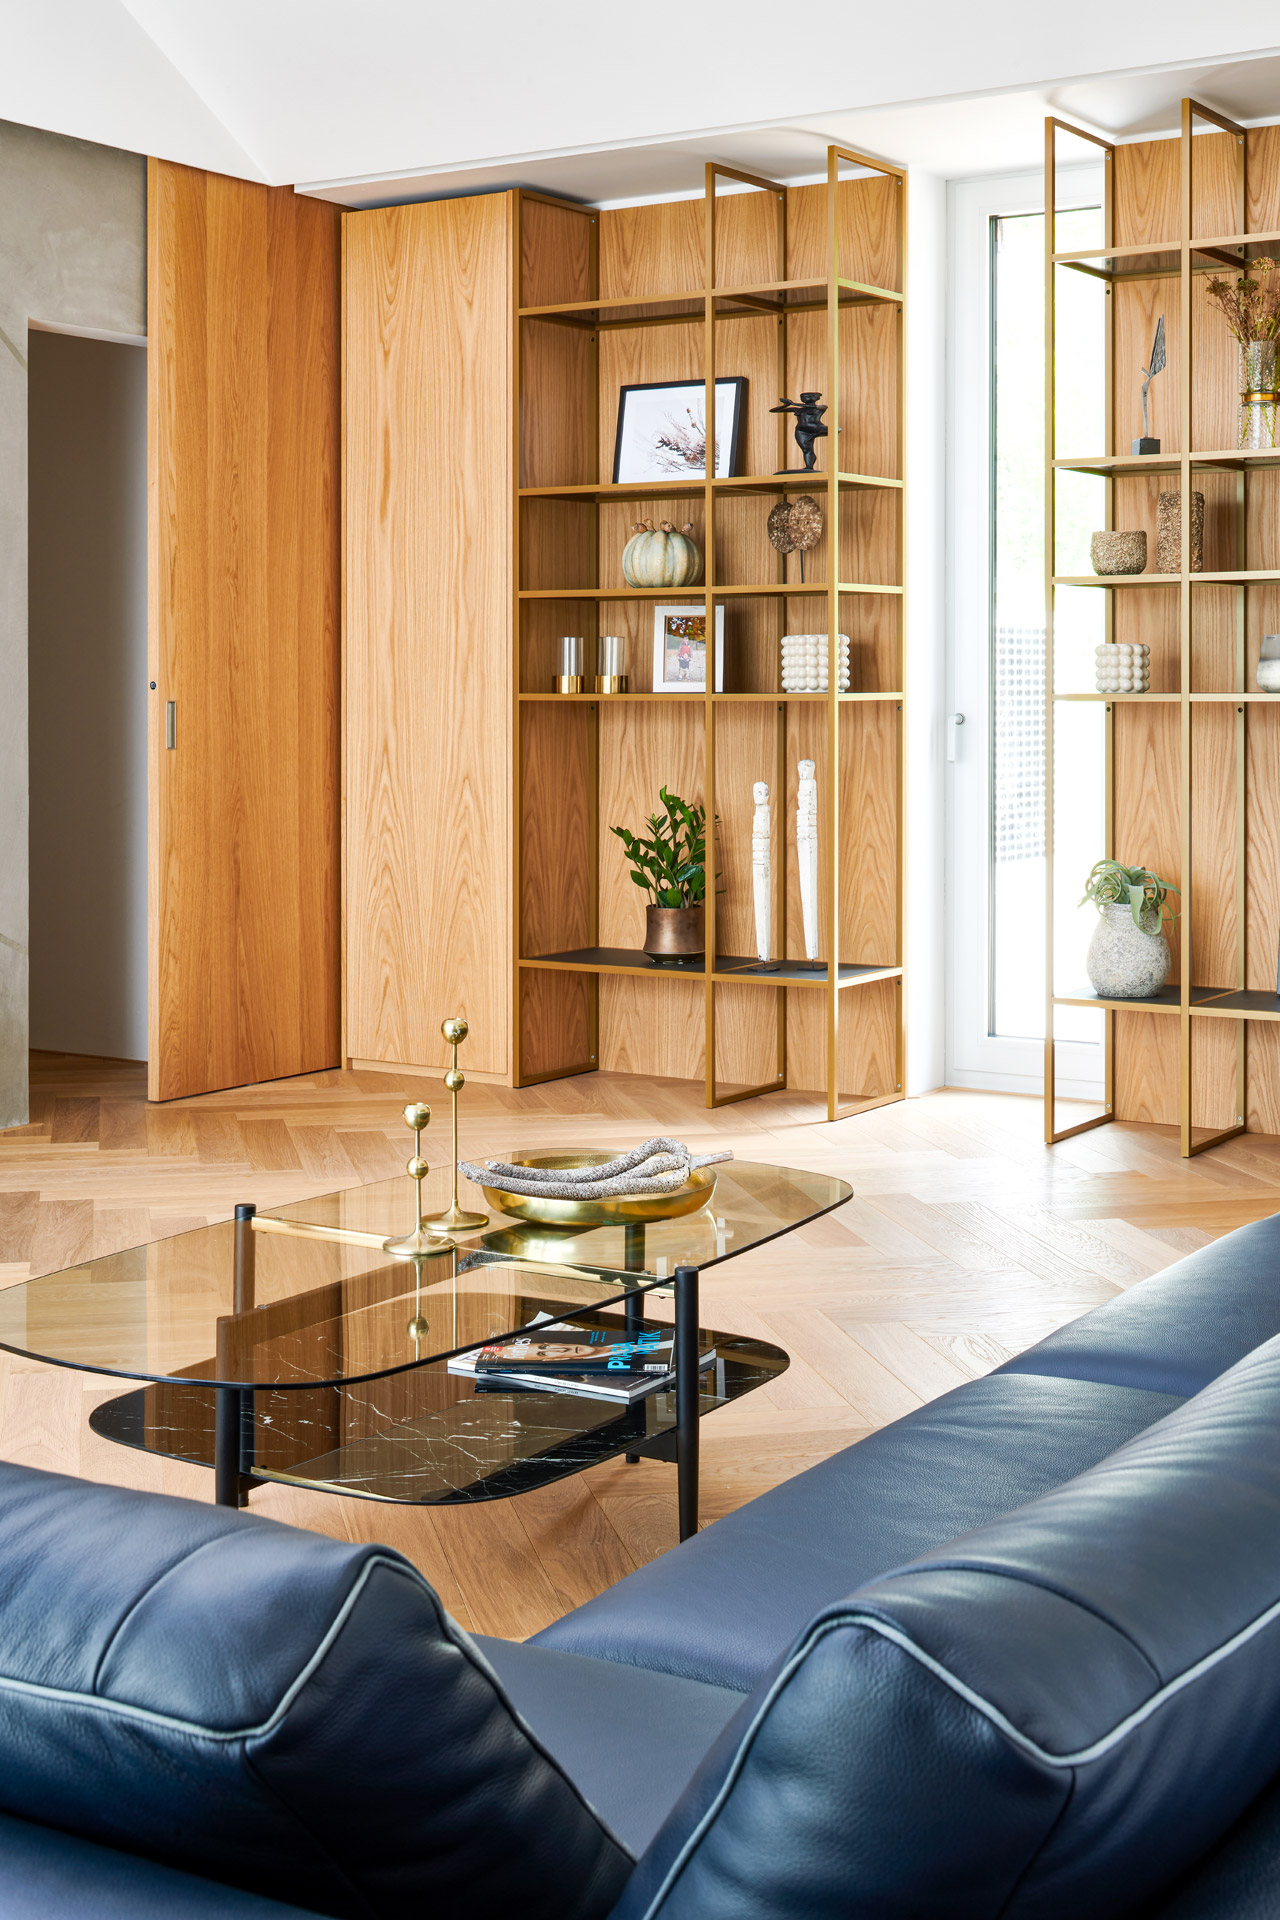 Hanák Furniture Design d'intérieur, Salon